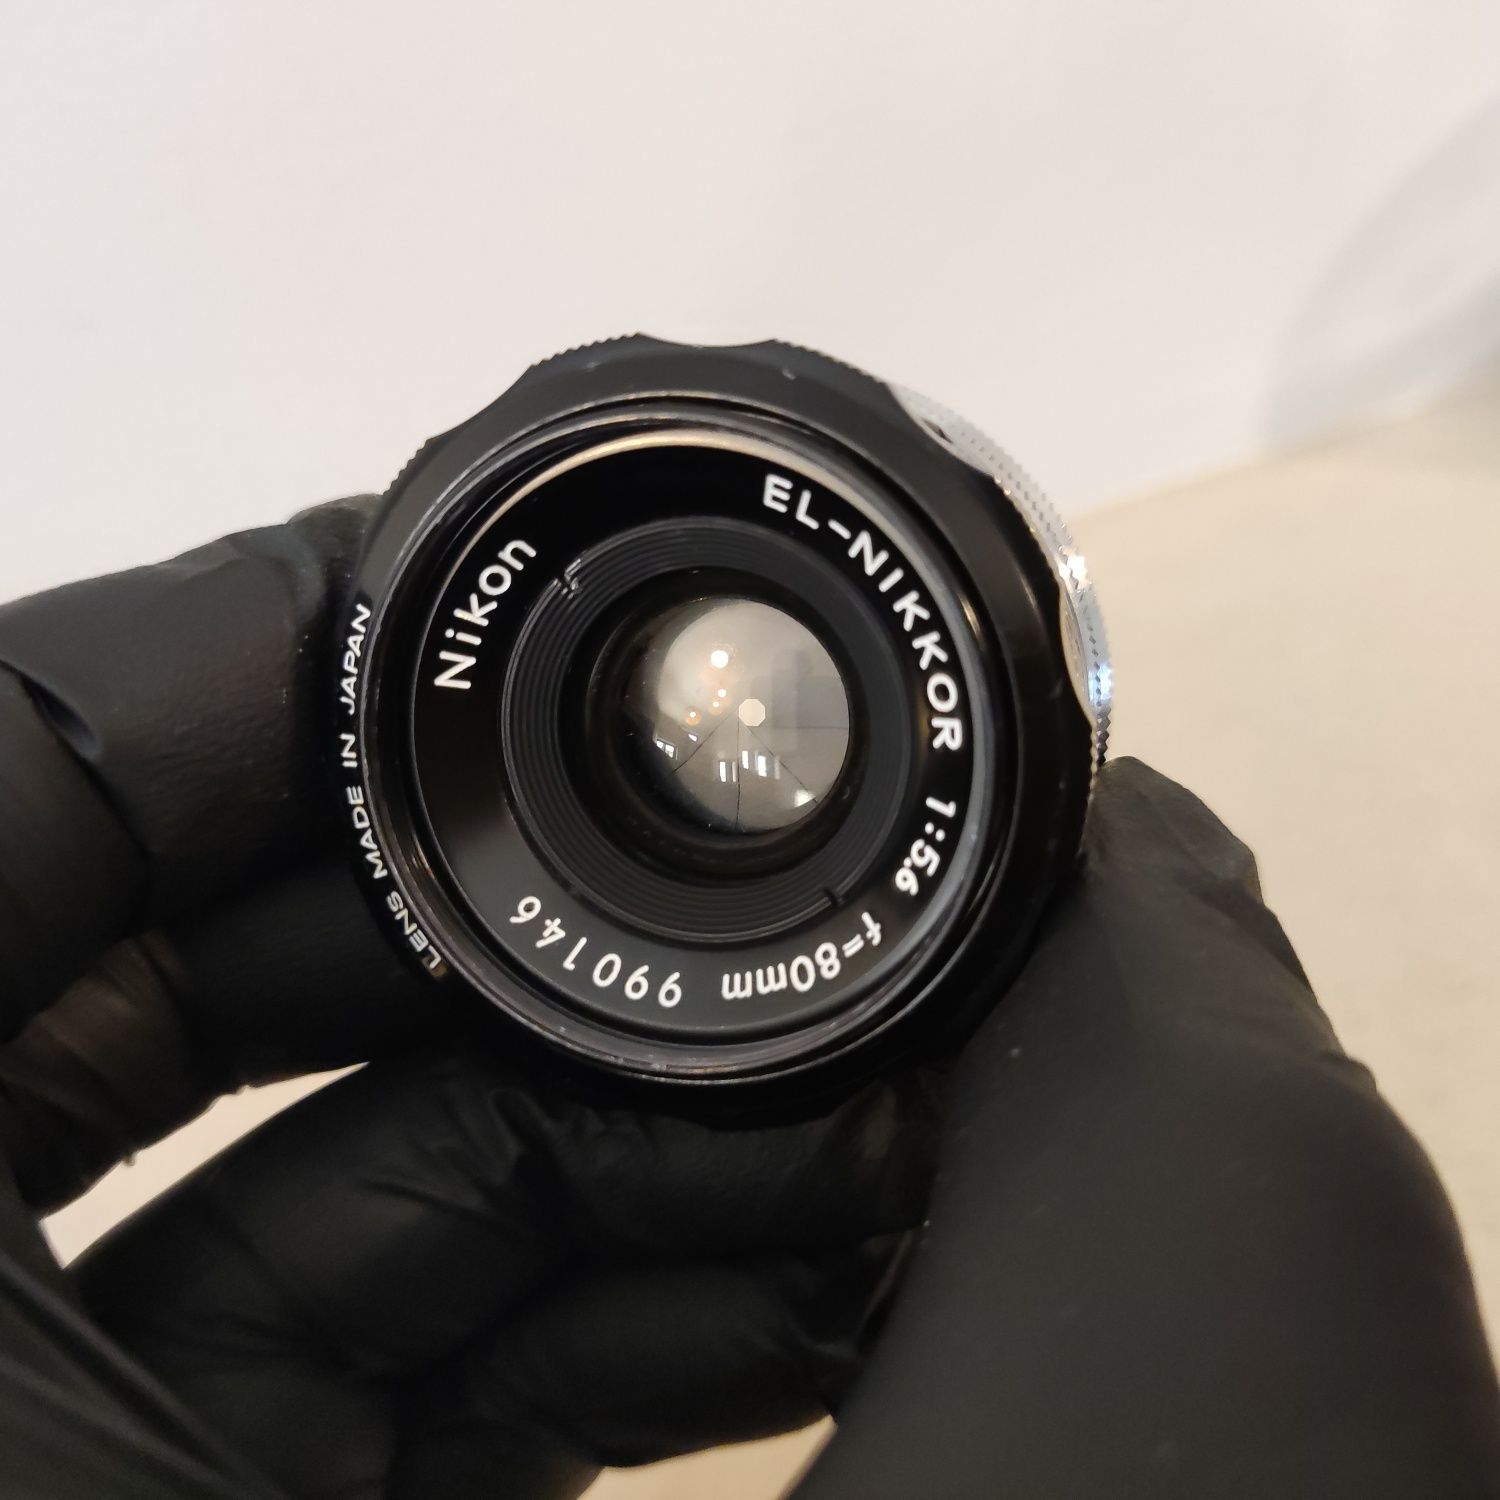 Lente Nikon EL-Nikkor 80mm 1:5.6 (Enlarging lens - ampliação)